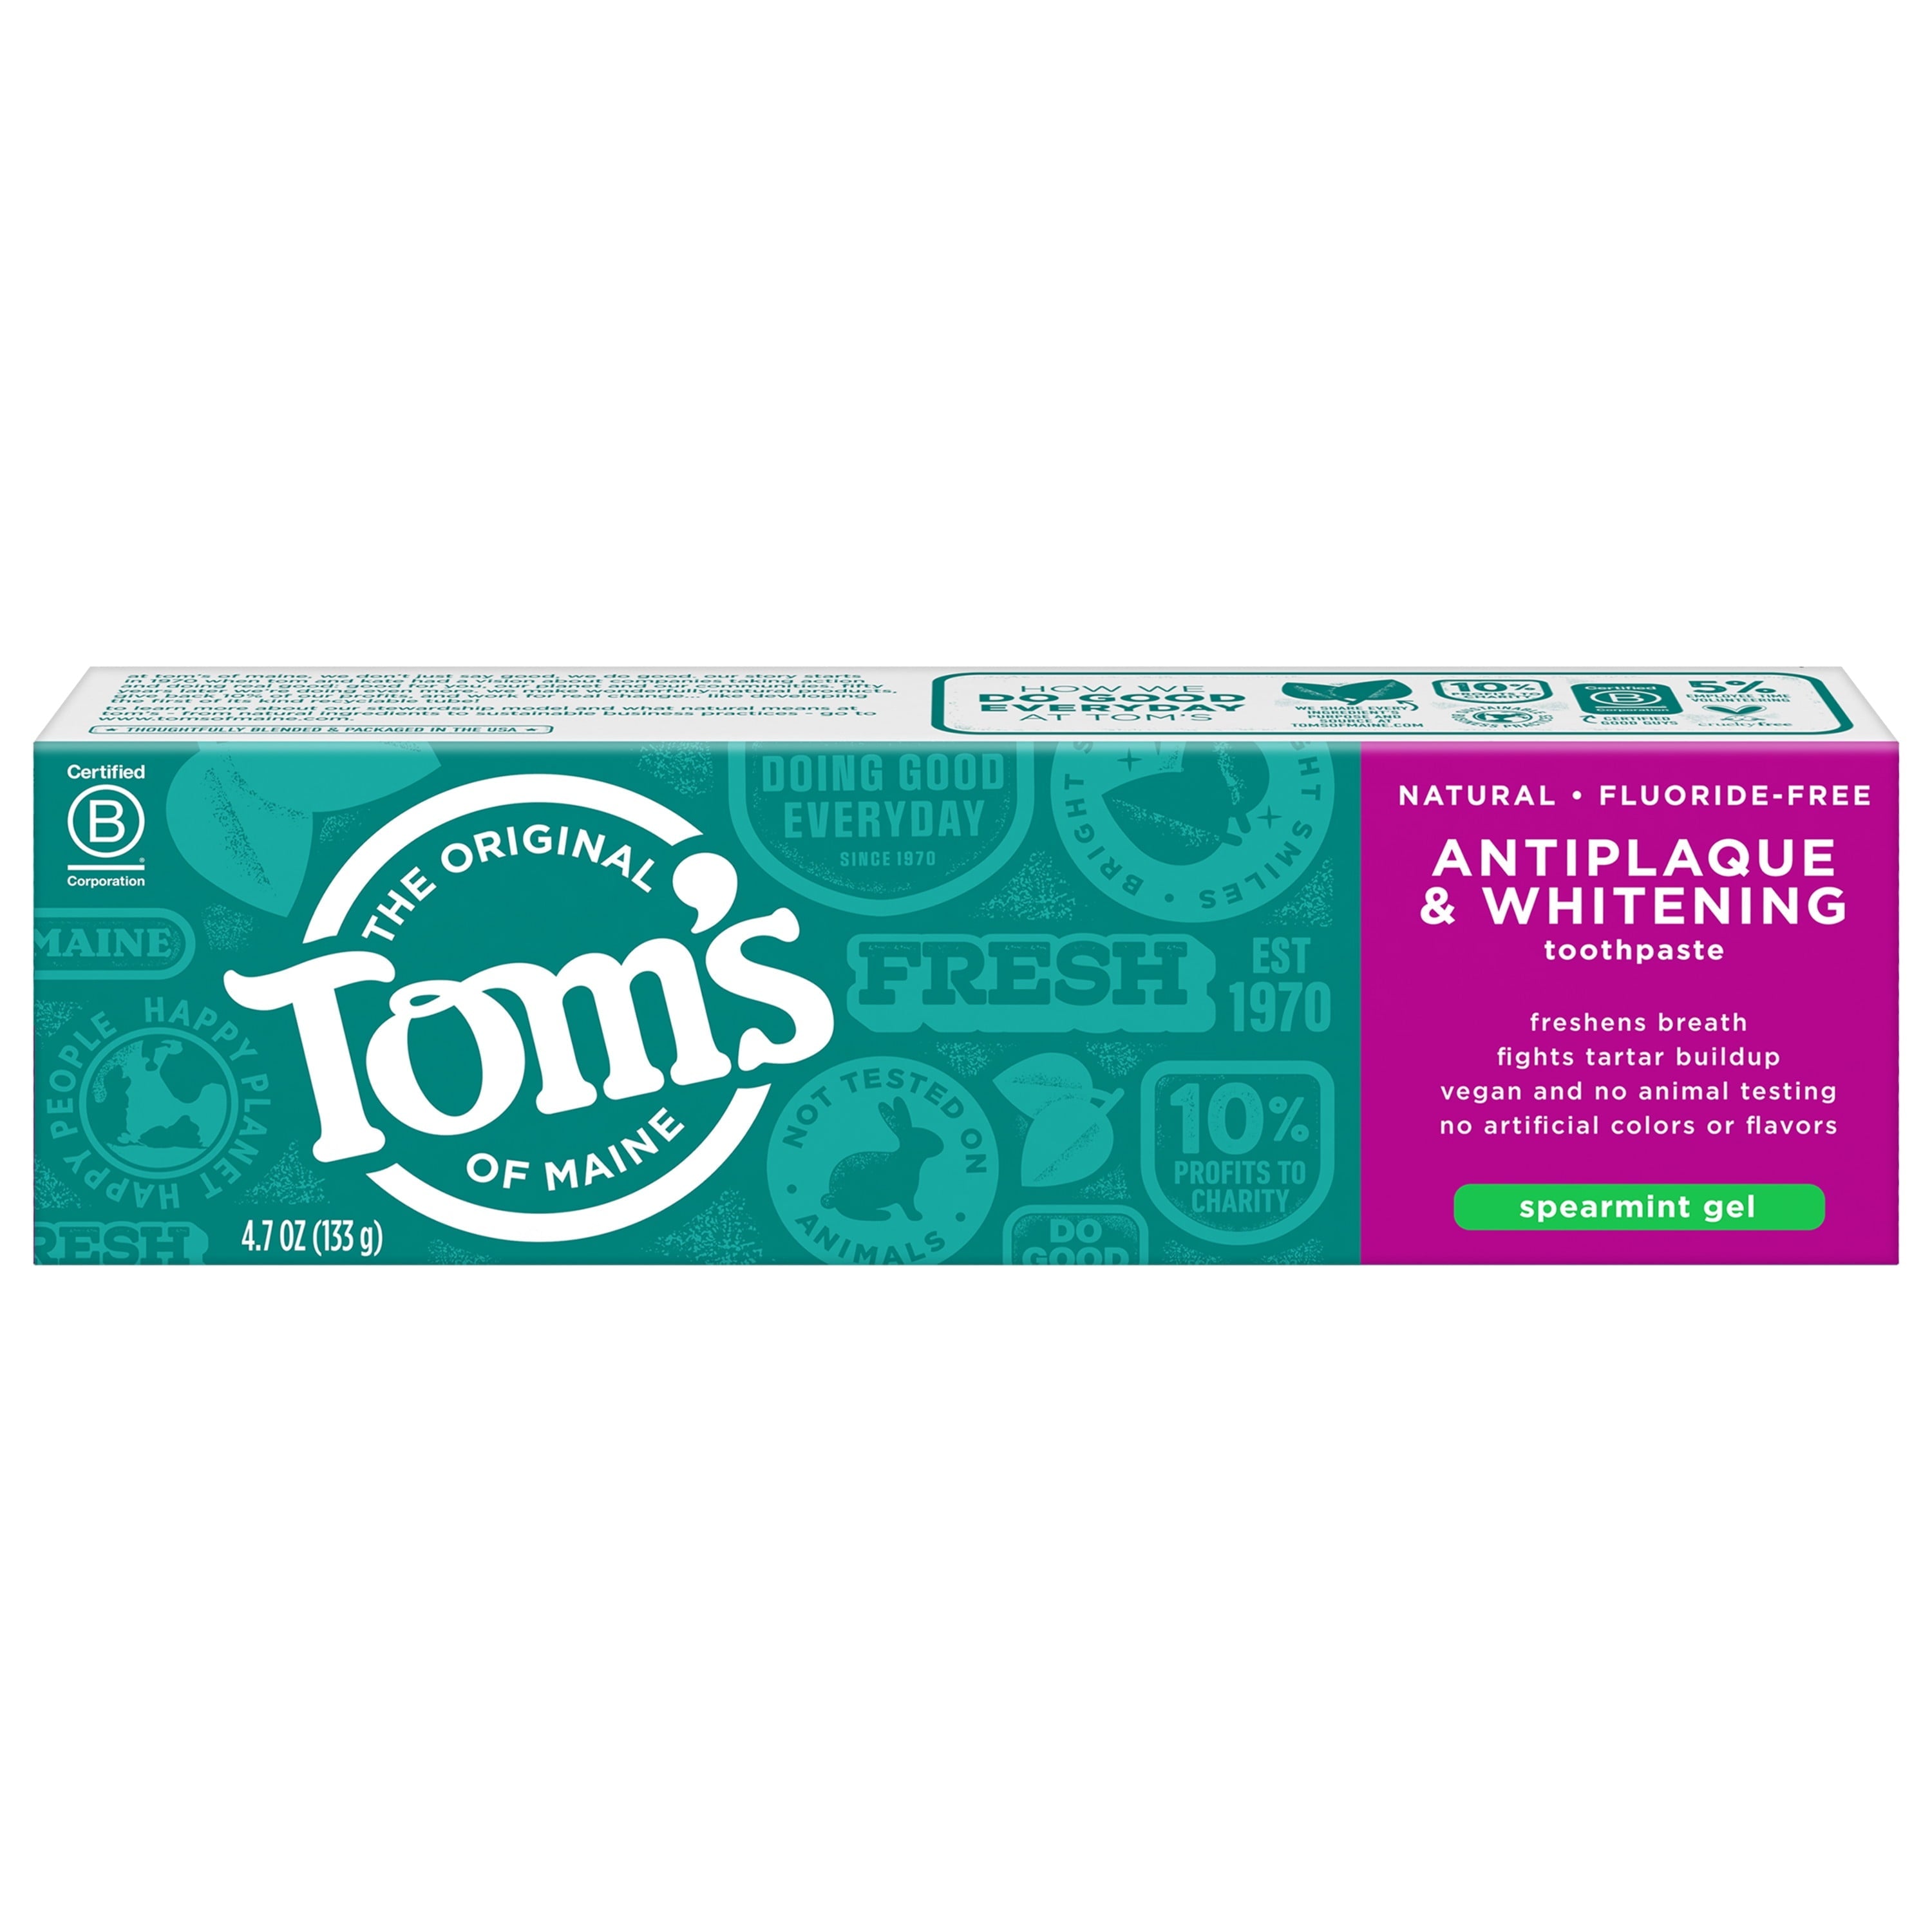 Tom's Of Maine Antiplaque & Whitening Toothpaste Spearmint Gel Fluoride-Free 4.7 Oz Tube